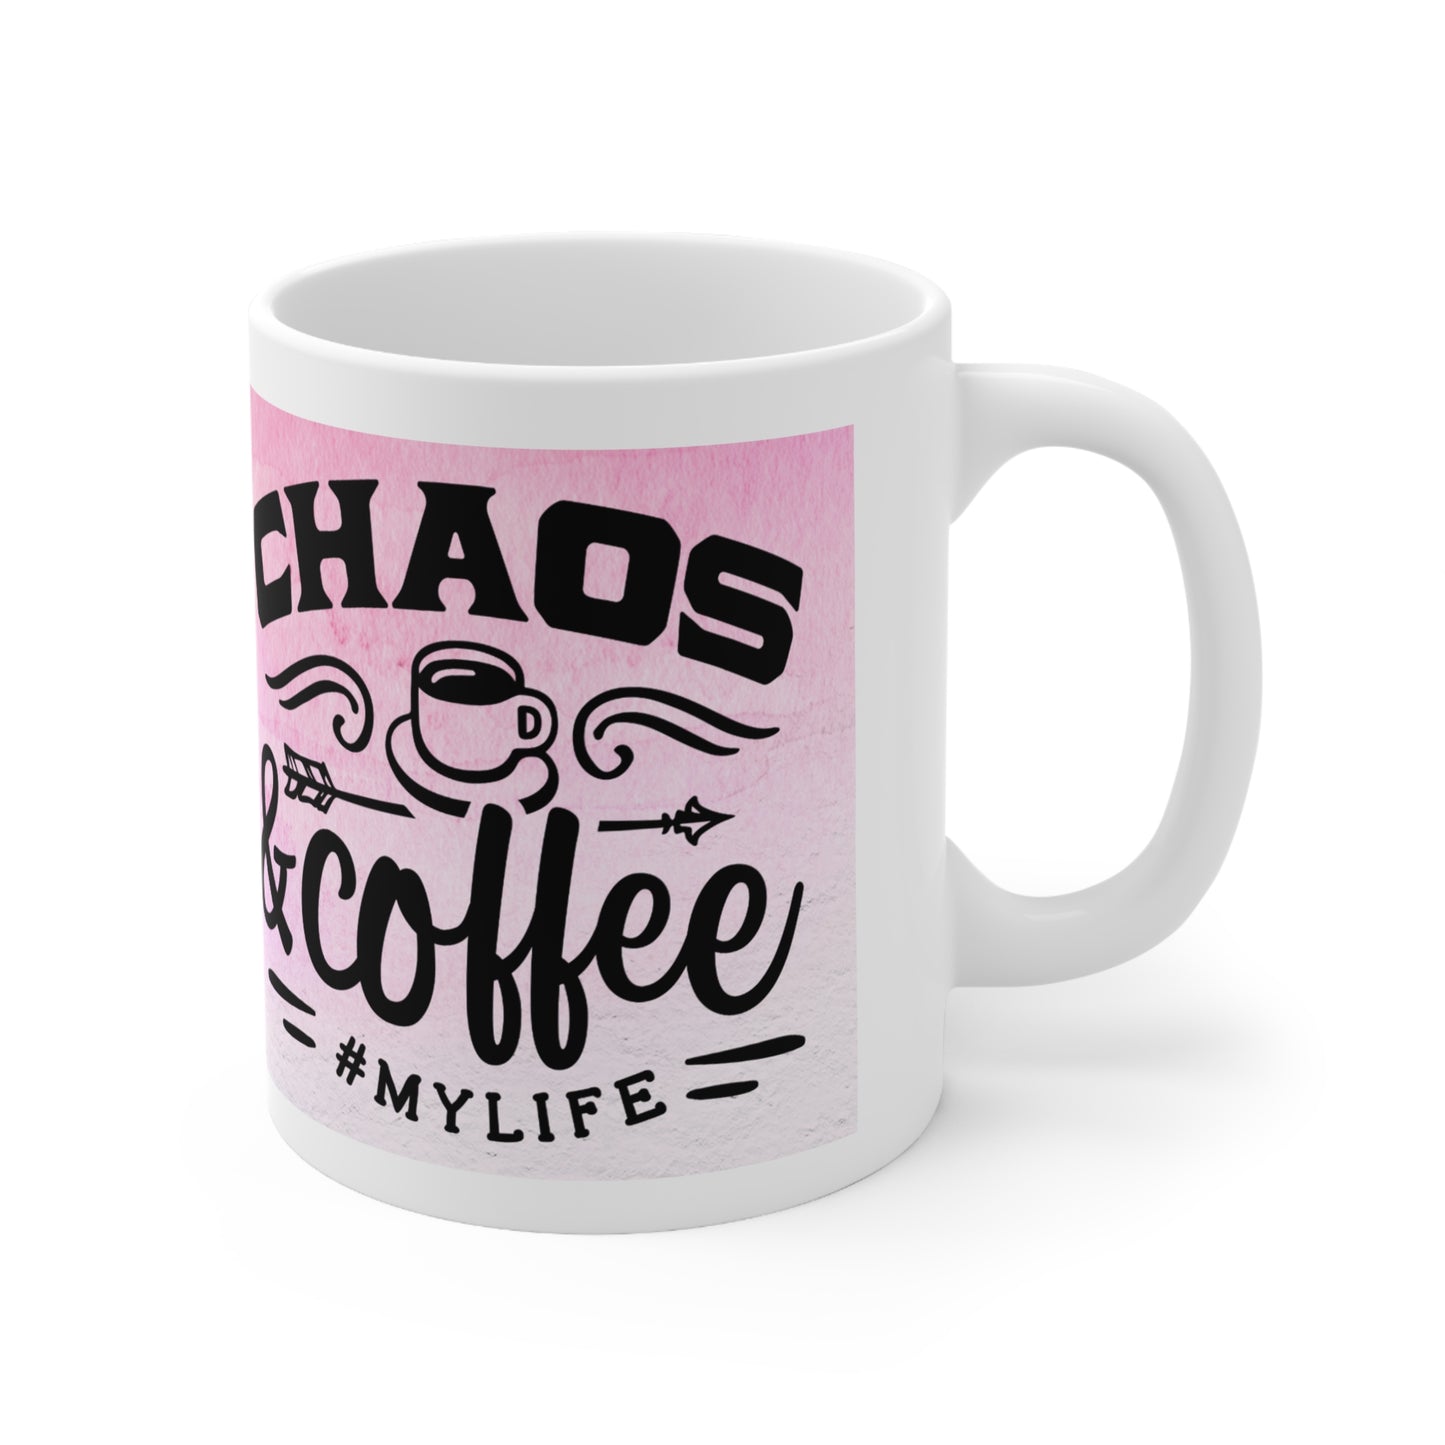 Chaos & Coffee #mylife Ceramic Mug 11oz